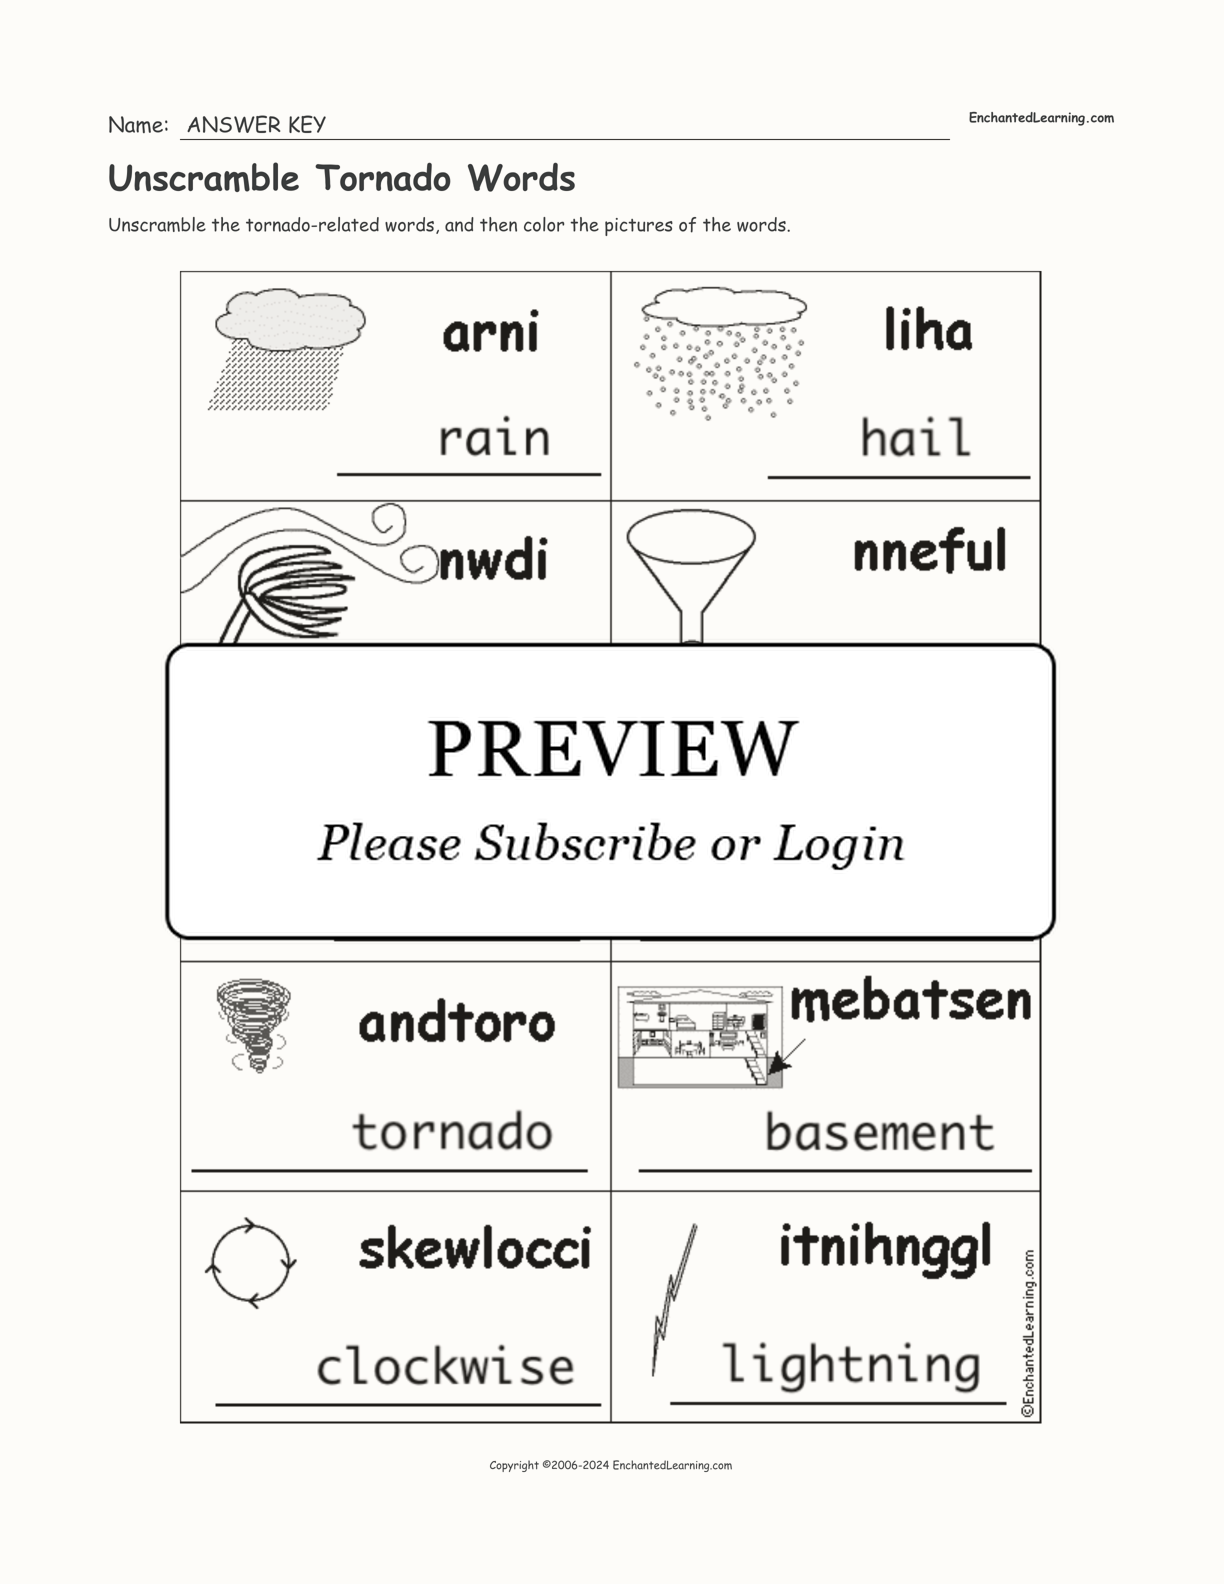 Unscramble Tornado Words interactive worksheet page 2